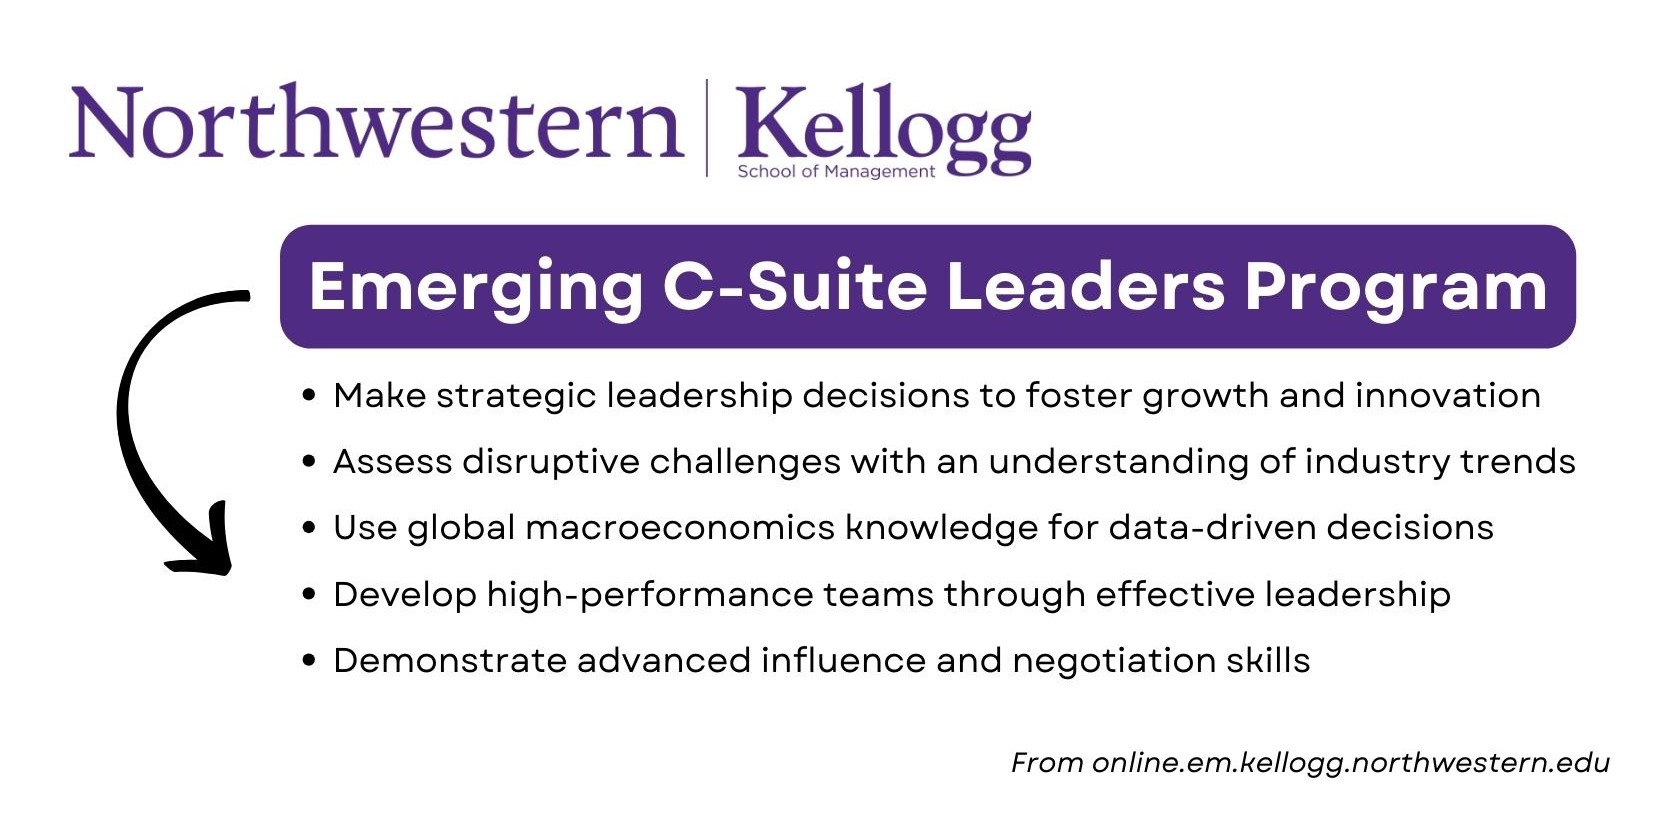 Northwestern Kellogg Emerging C-Suite Leaders Program overview with key benefits.